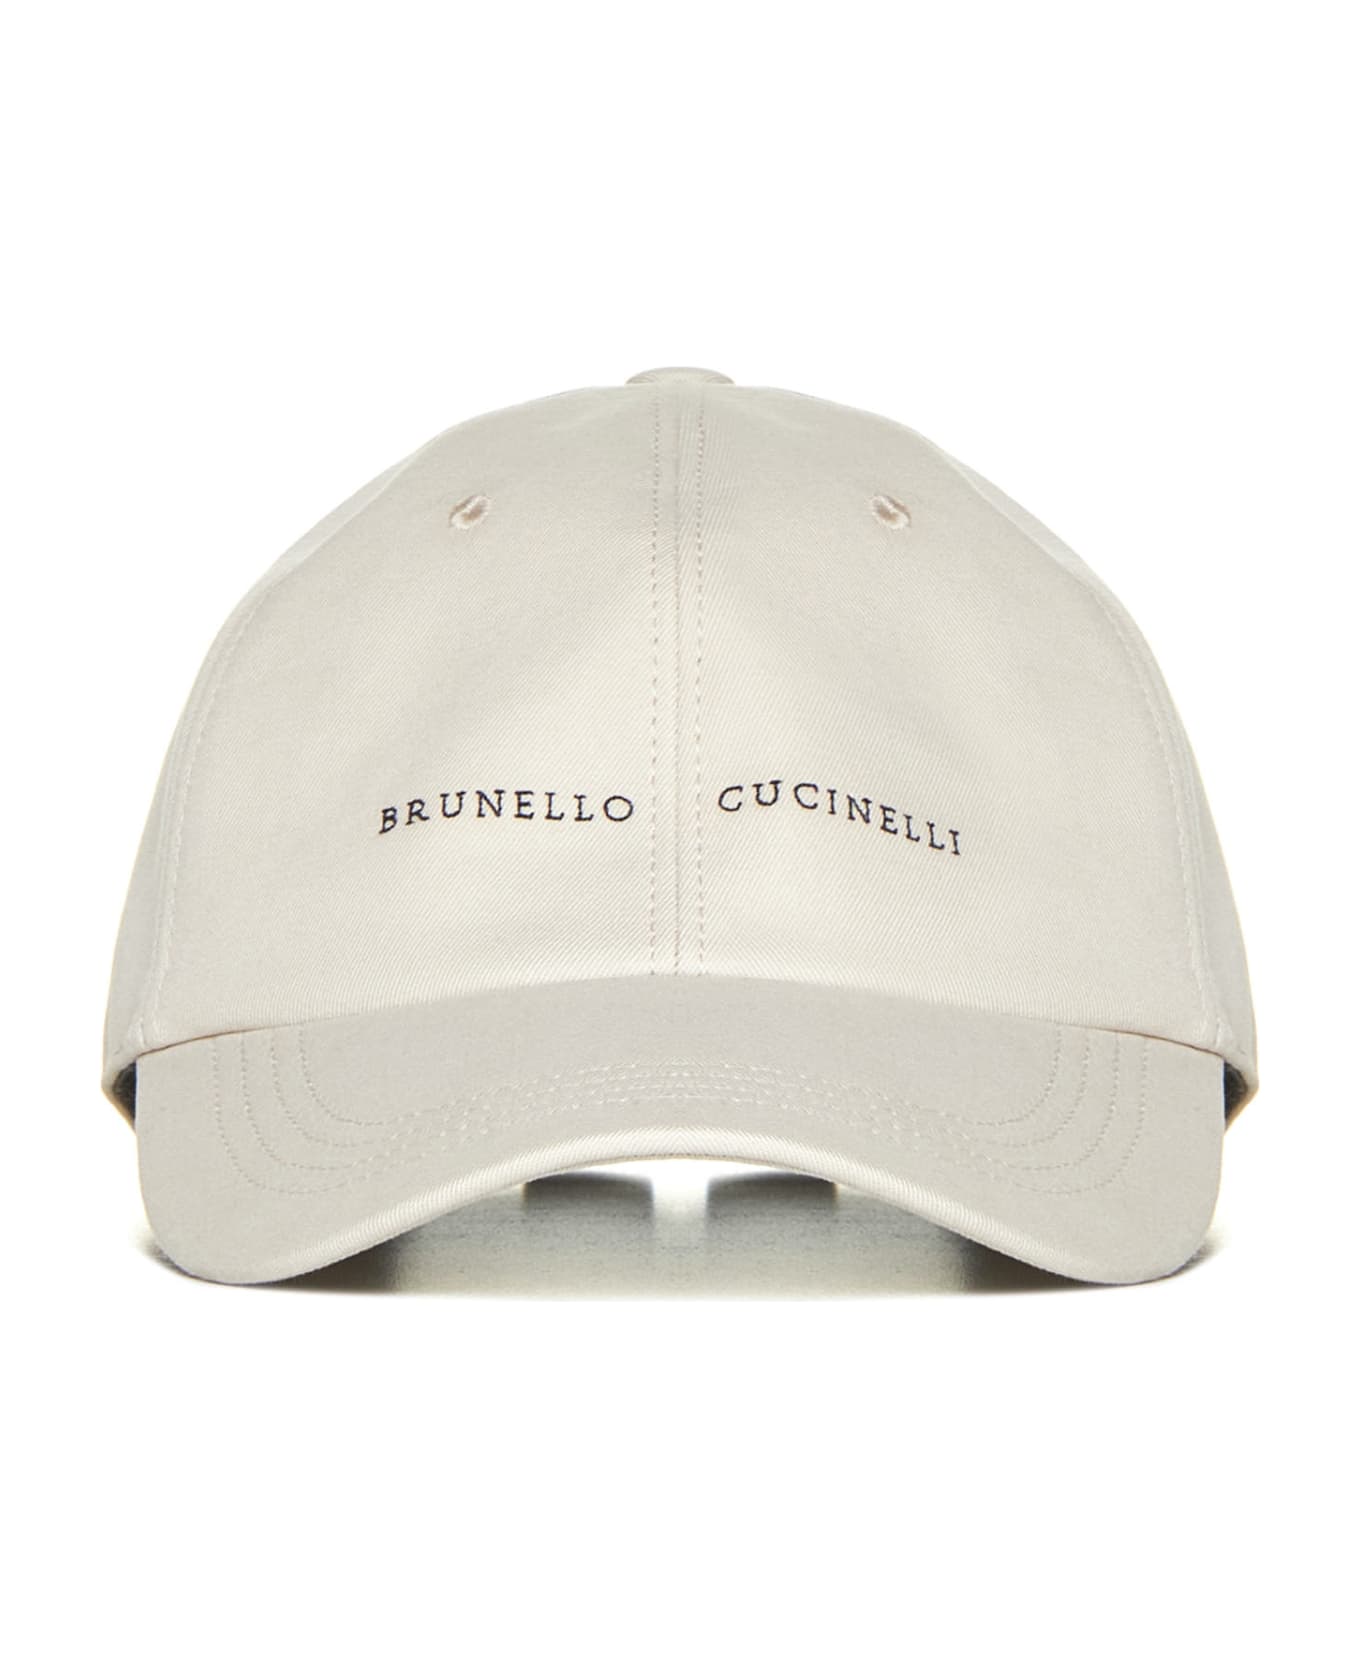 Brunello Cucinelli Embroidered Logo Baseball Cap - Oat 帽子